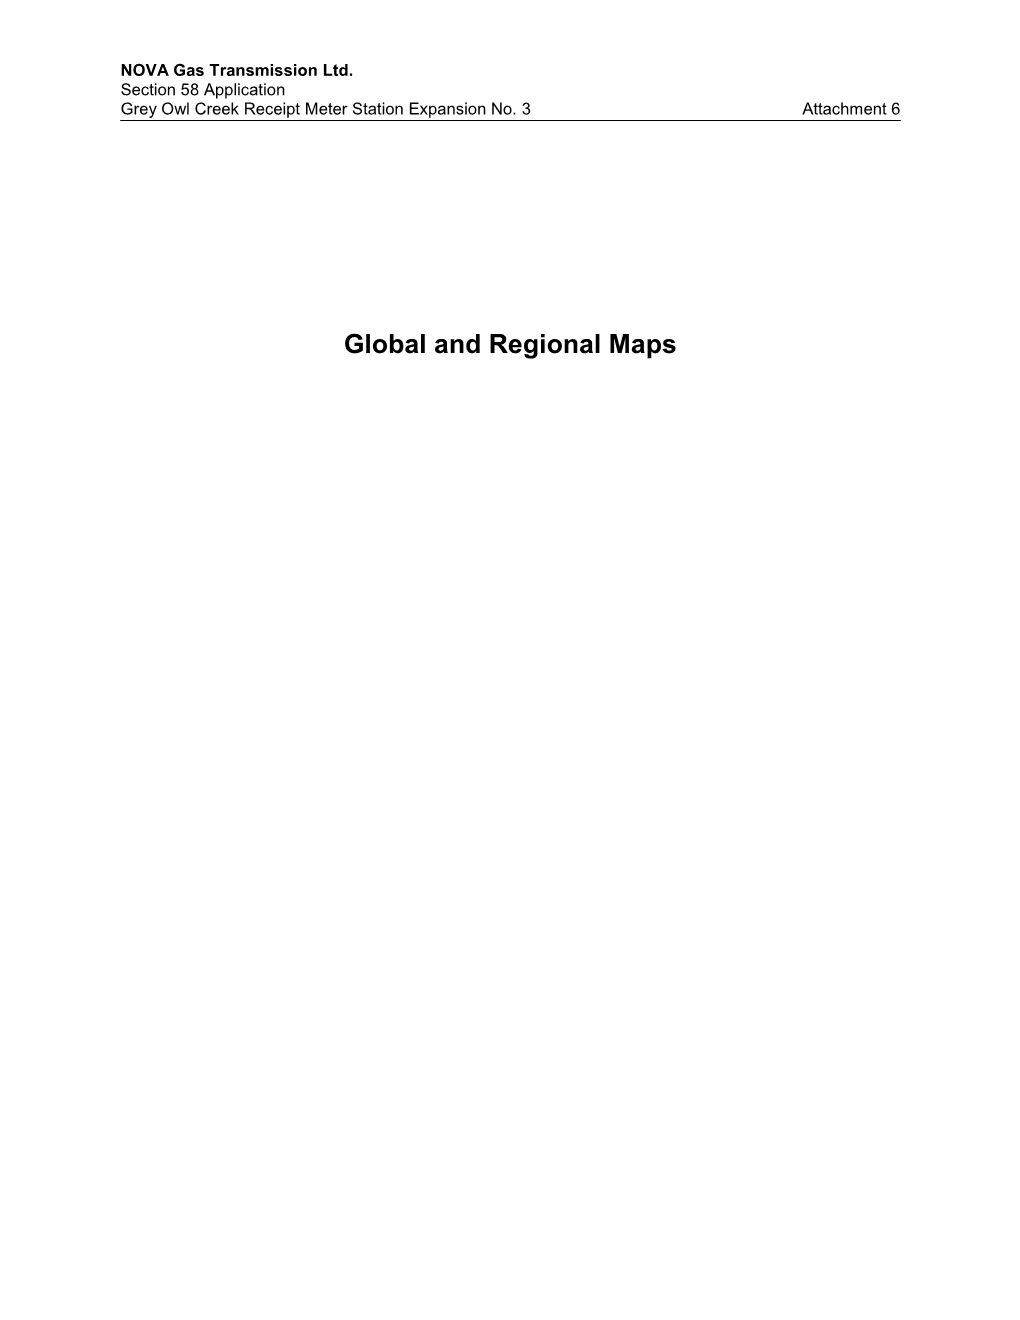 Global and Regional Maps NOVA Gas Transmission Ltd